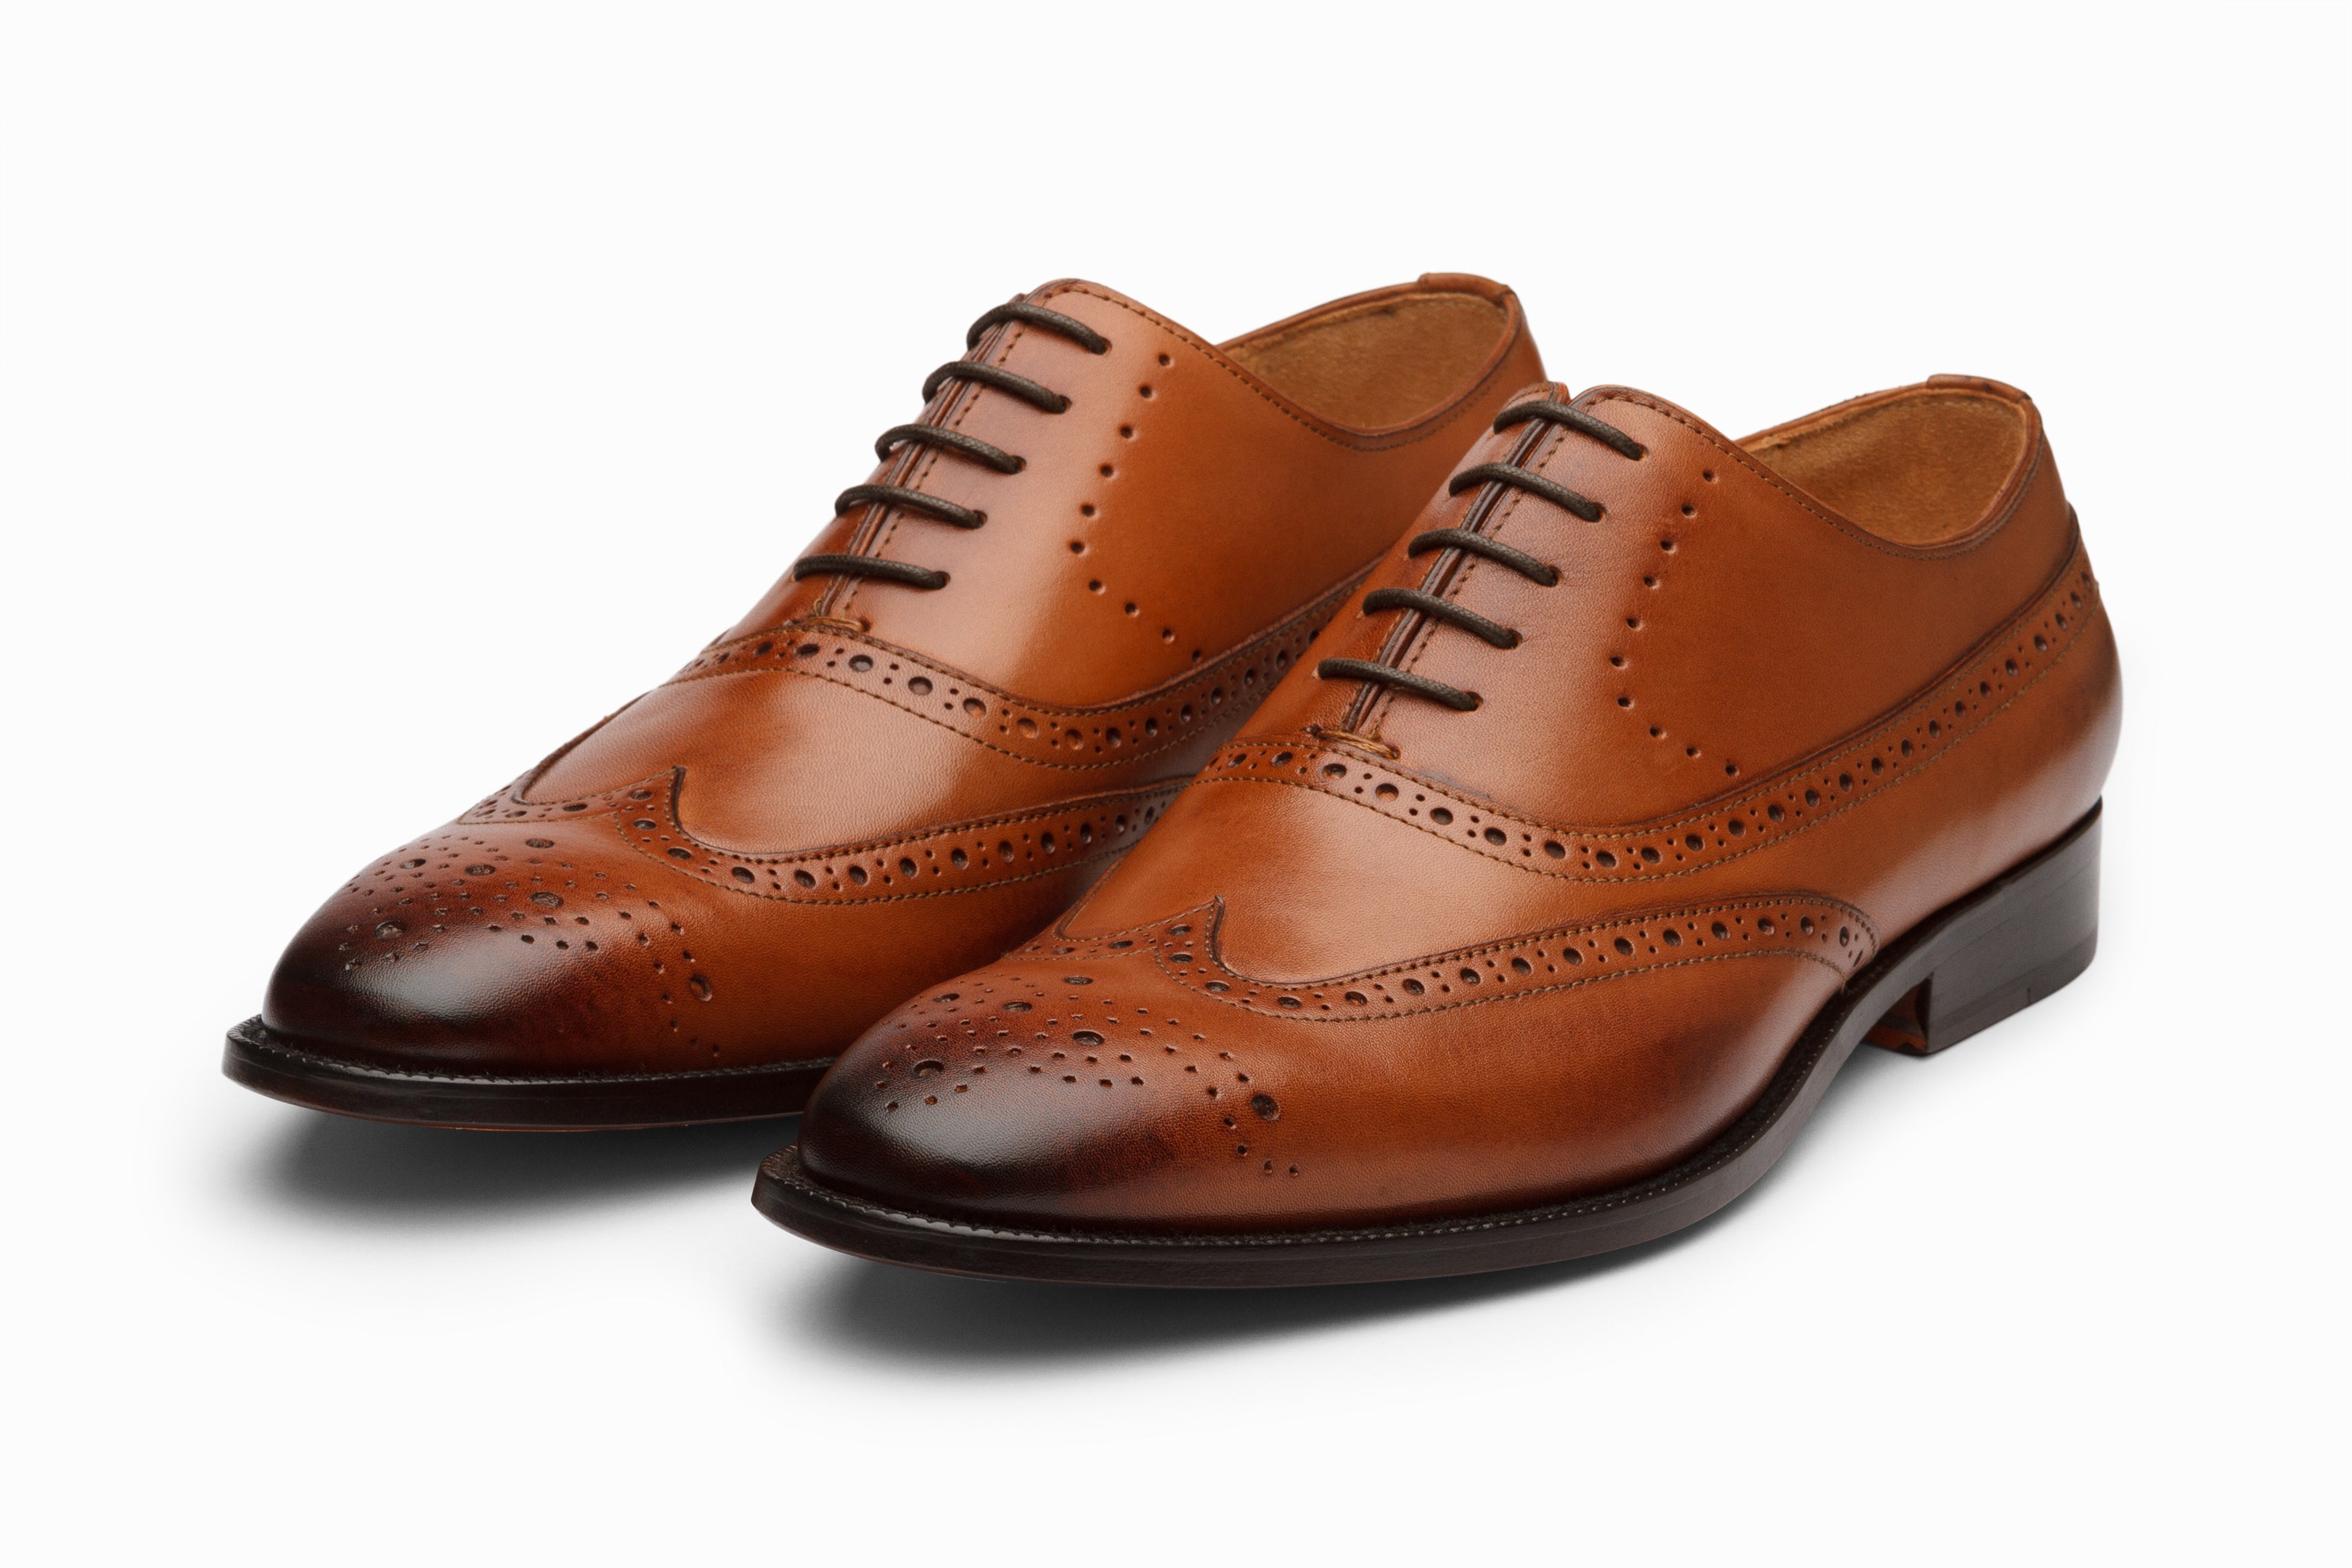 Wingtip Oxford Brogue - Tan colour shoe 